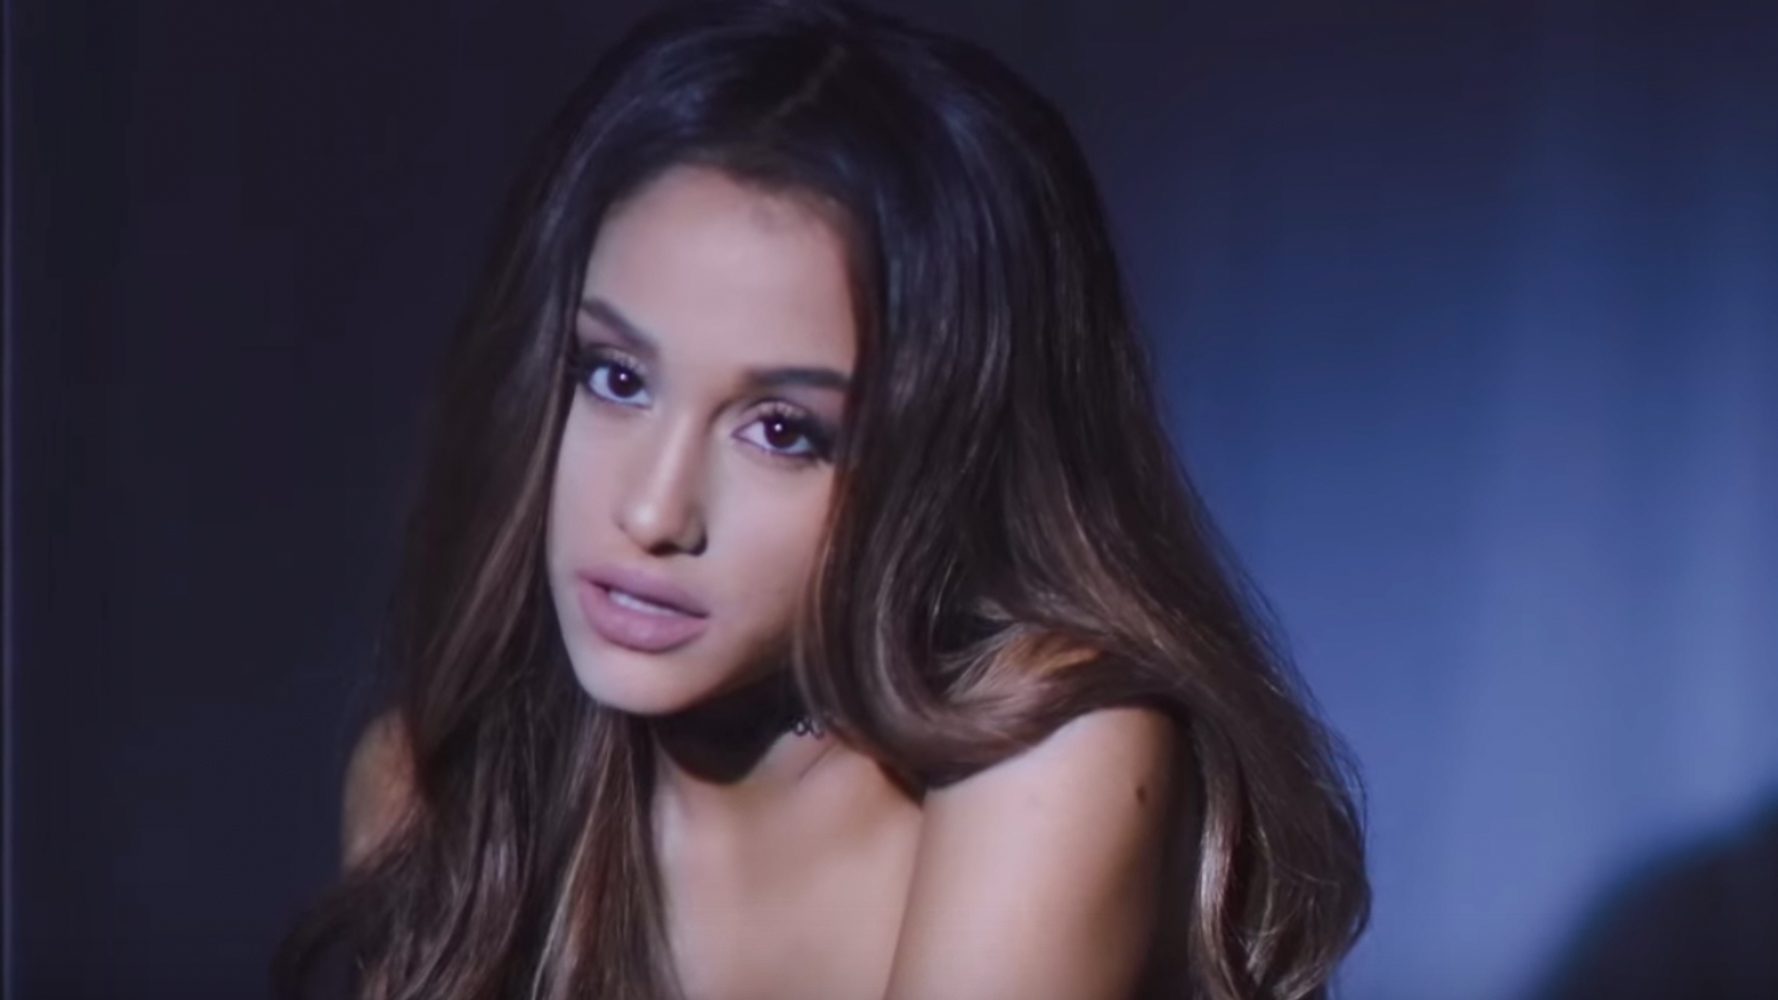 WATCH: Ariana Grande in new ‘Dangerous Woman’ music video